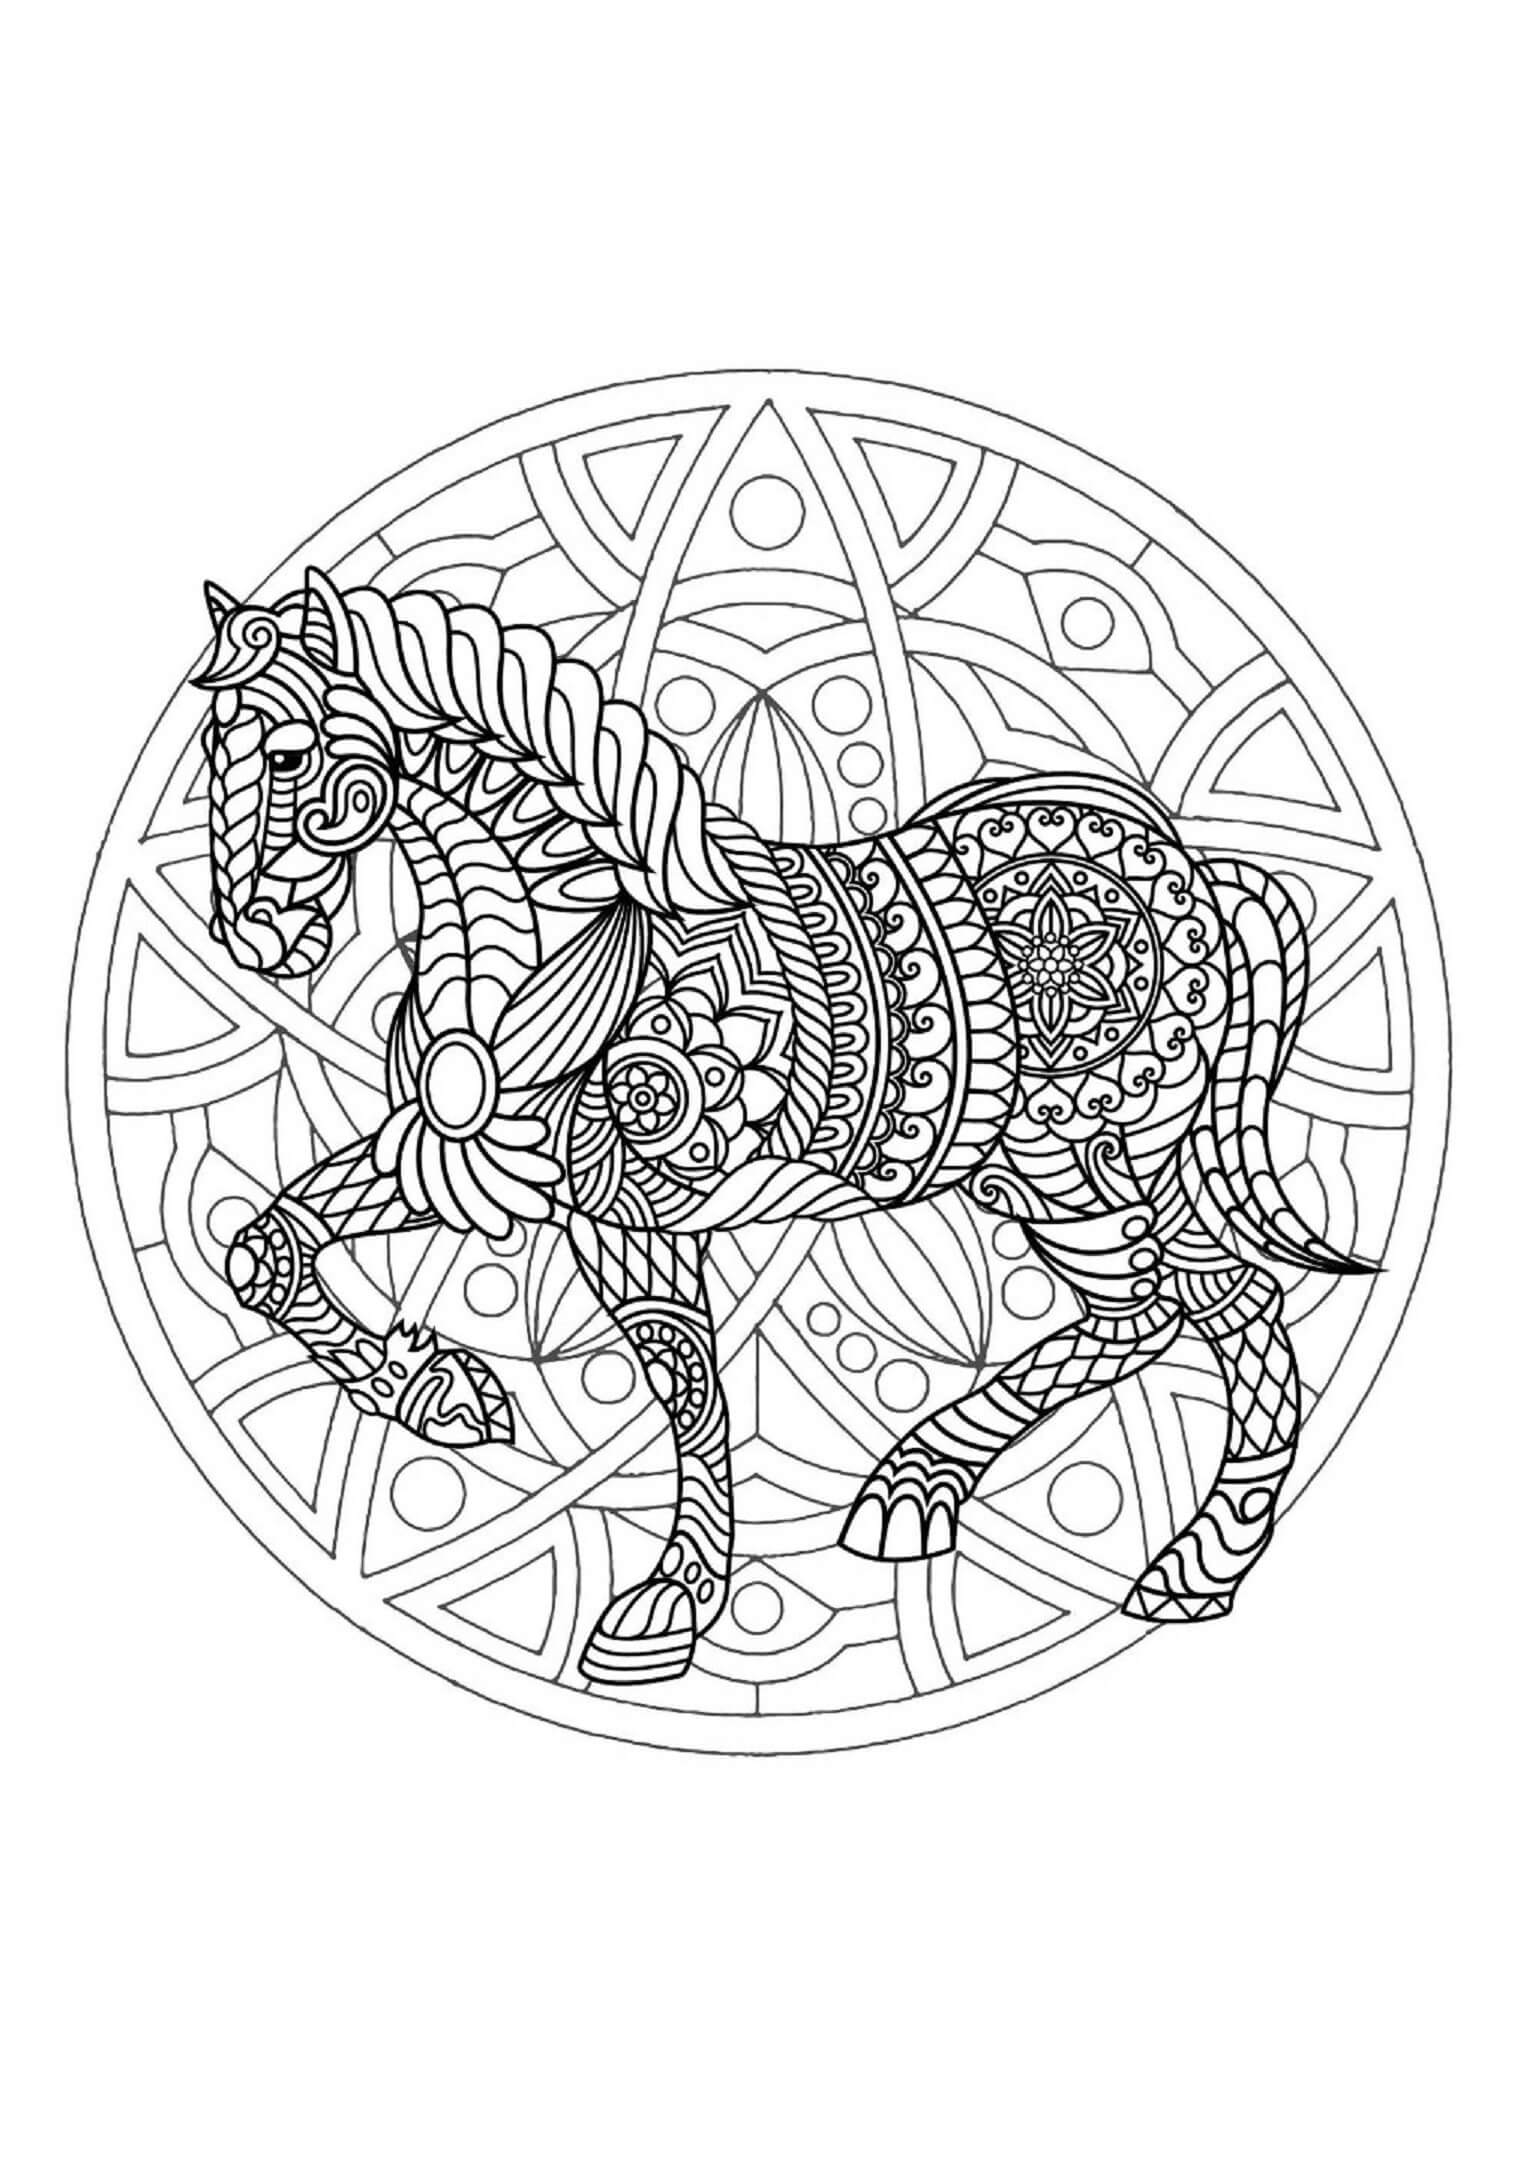 Mandala Horse Coloring Page – Sheet 7 Mandalas